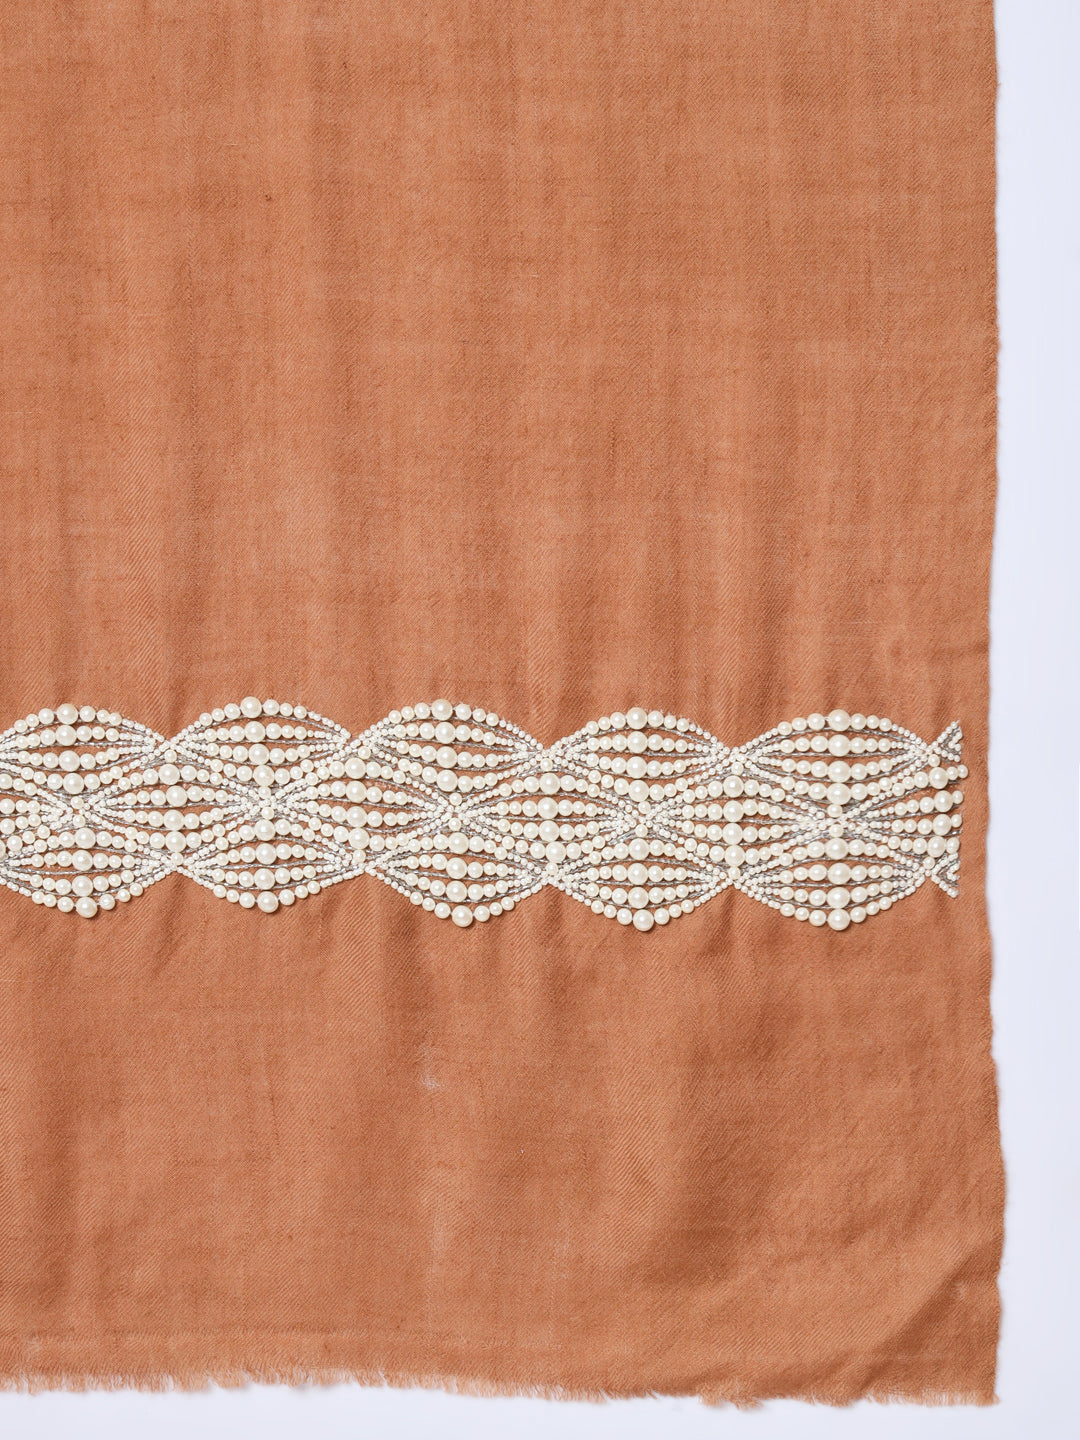 shawls online, embroidered shawls